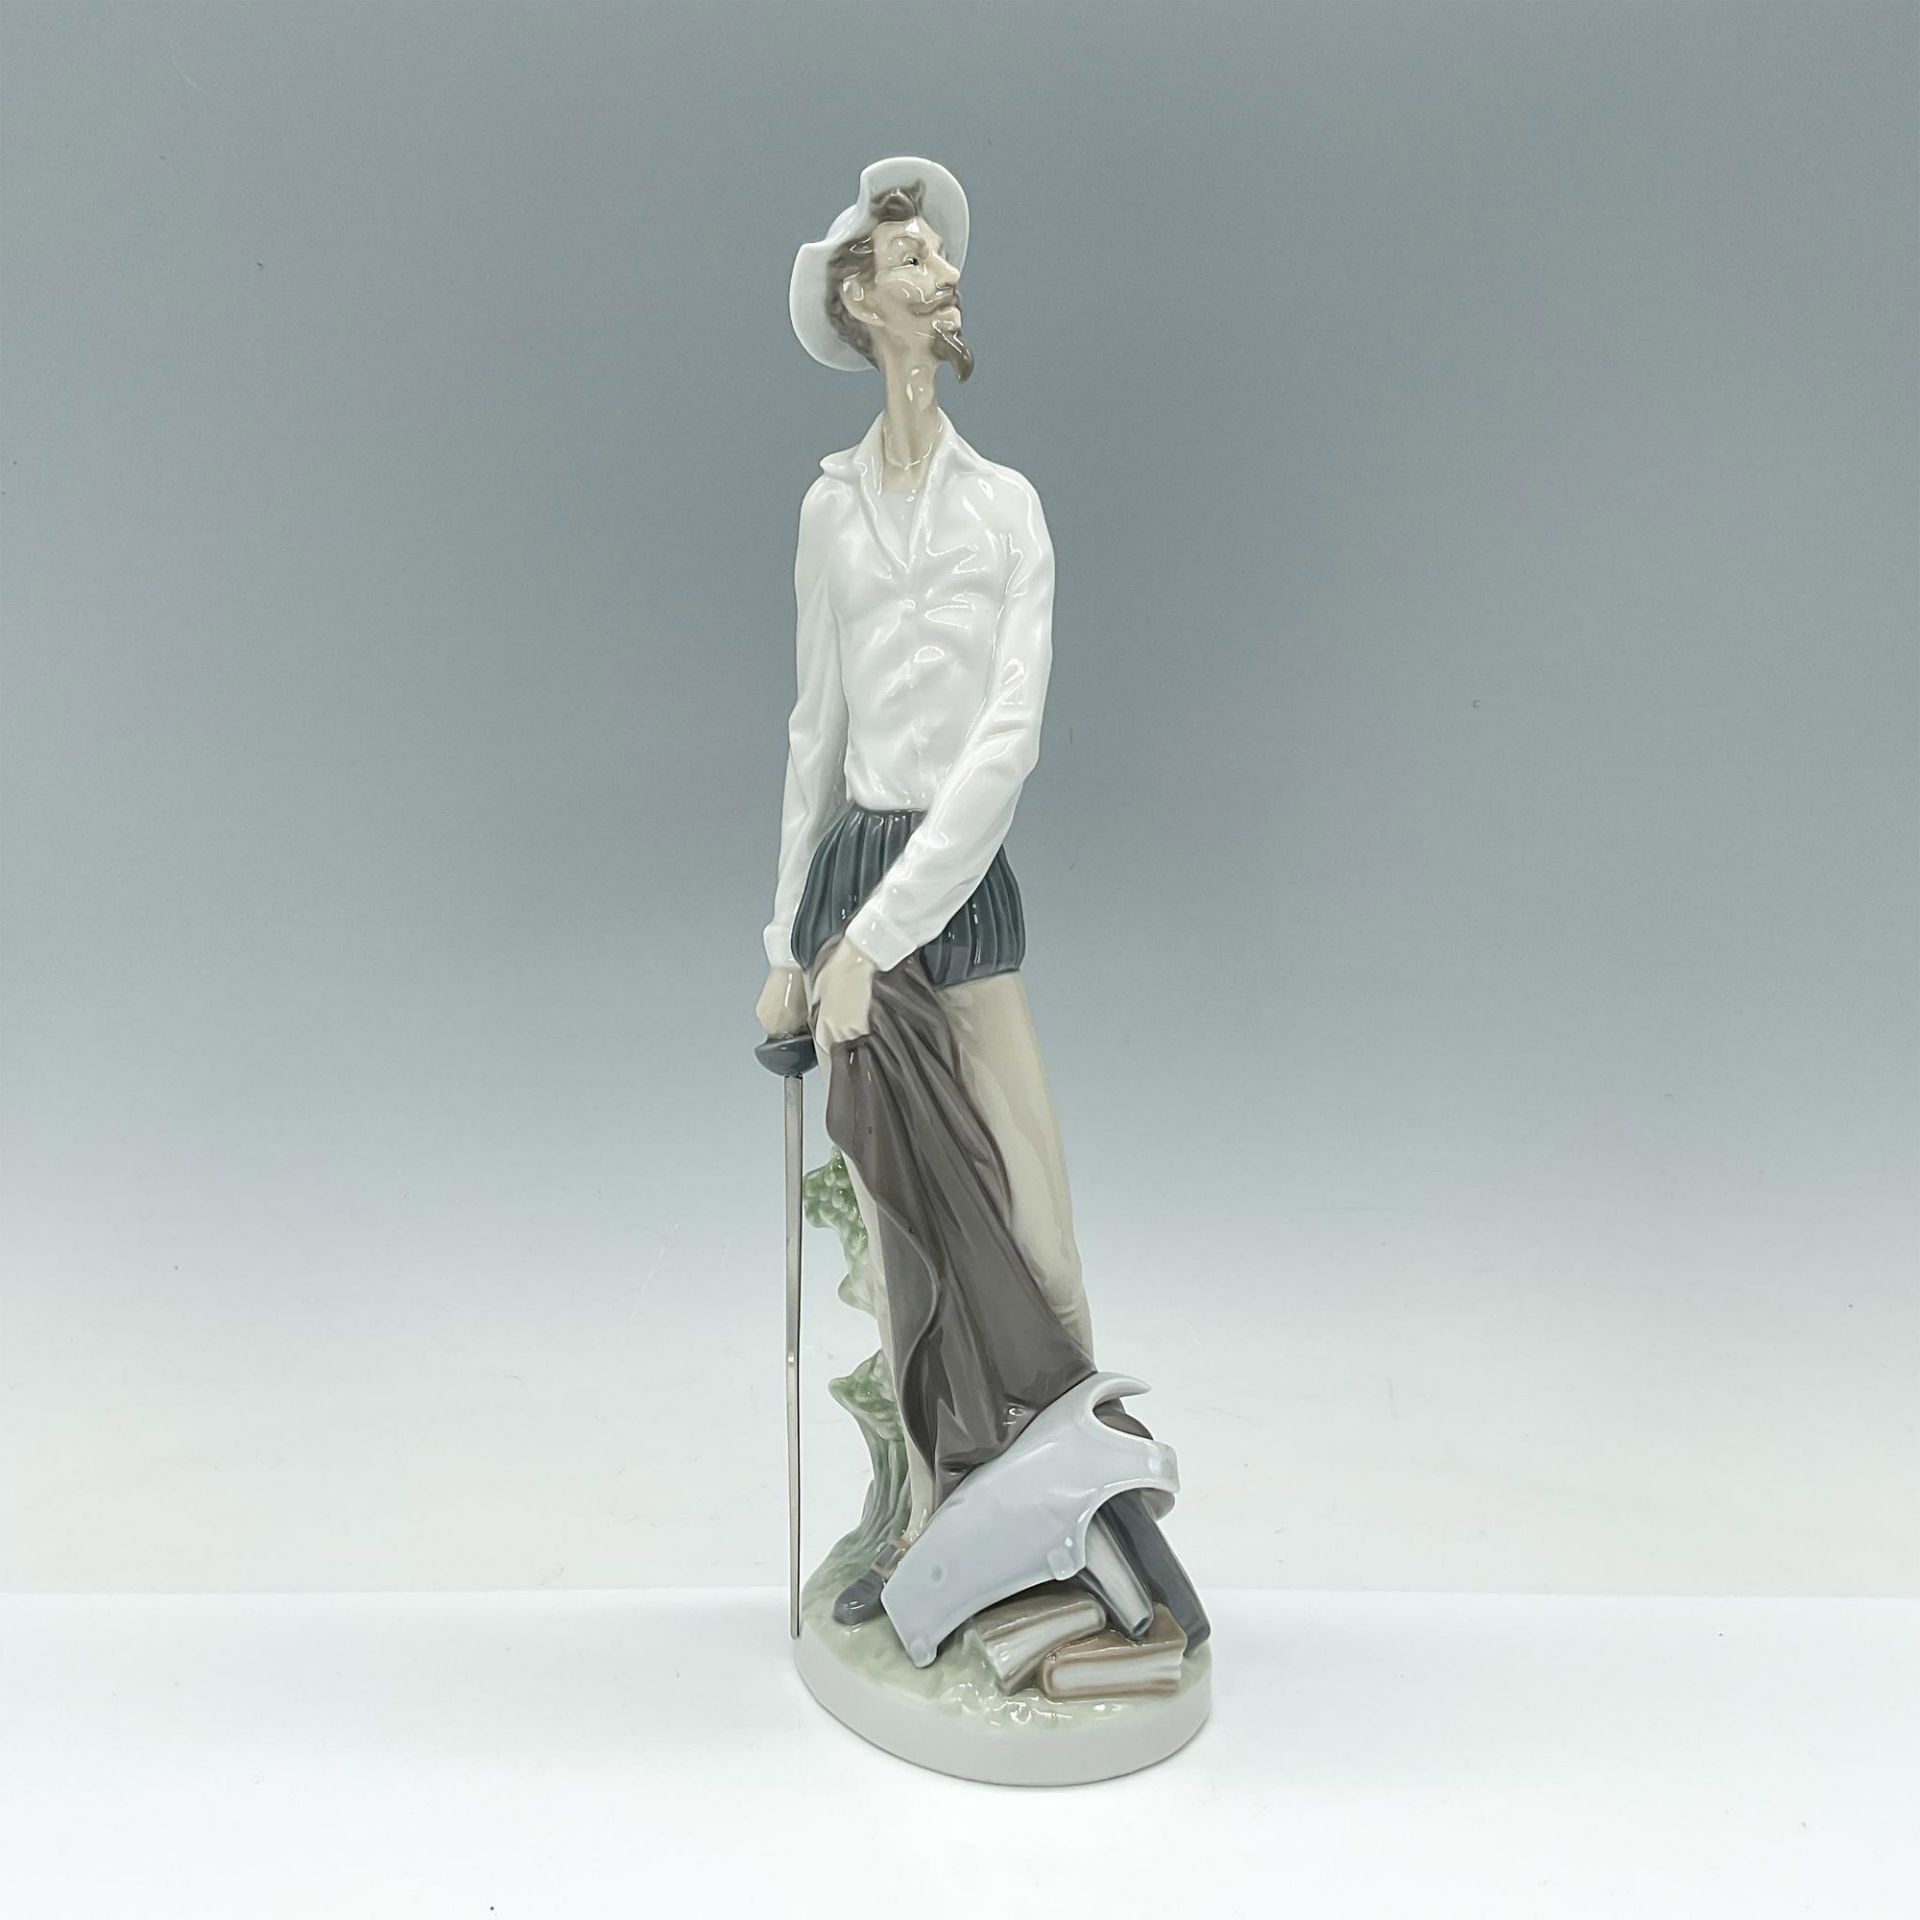 Don Quixote 1002265 - Lladro Porcelain Figurine